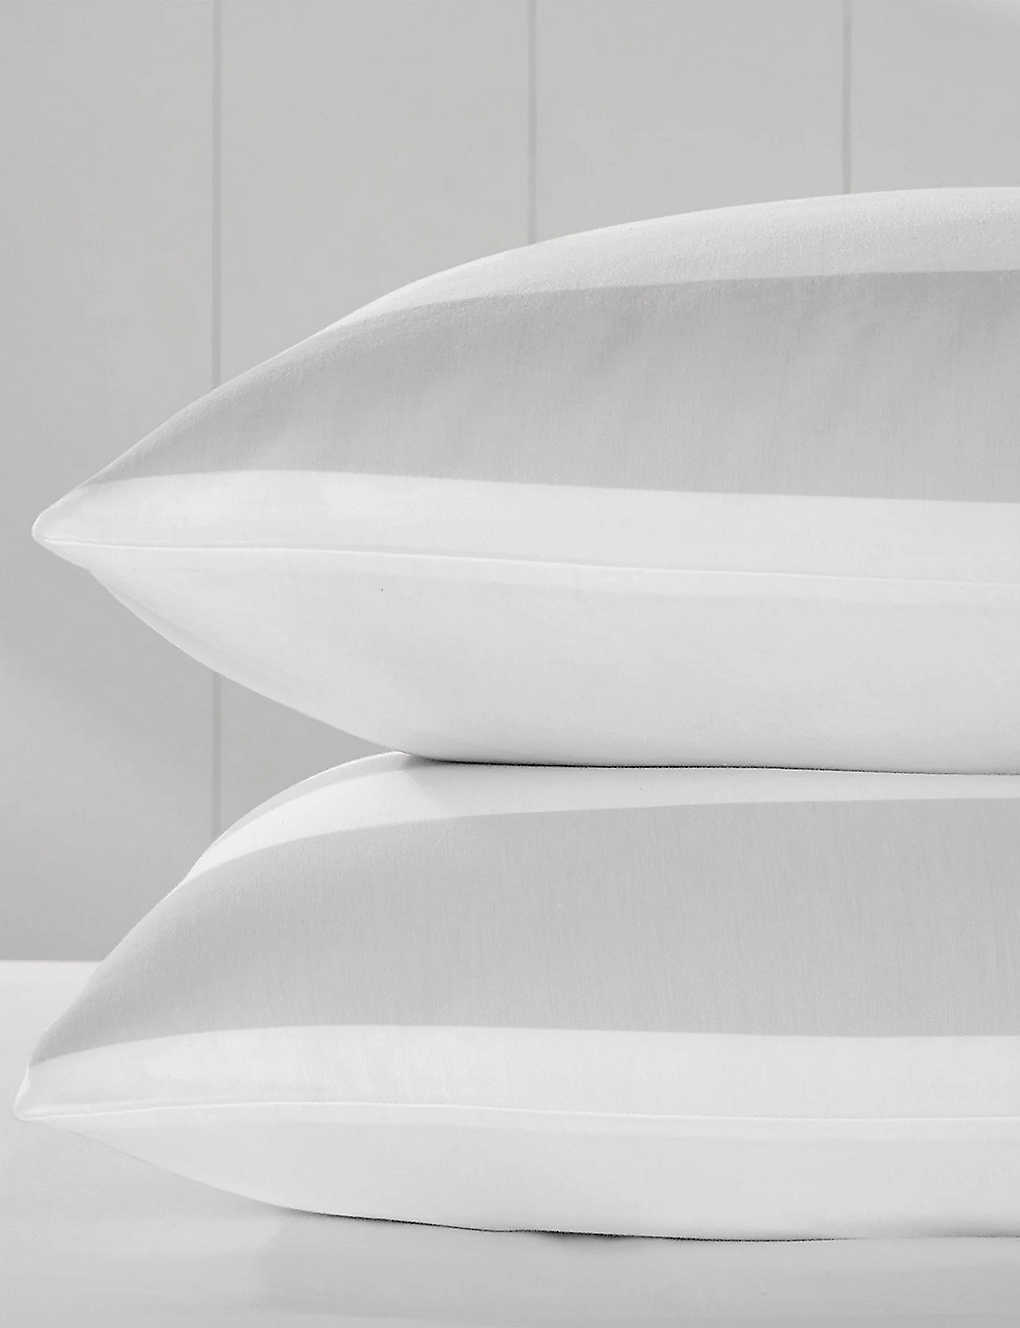 THE WHITE COMPANY マリス ストライプ スタンダード コットン ピローケース50×75cm Maris striped standard cotton pillowcase 50cm x 75cm WHITE/GREY